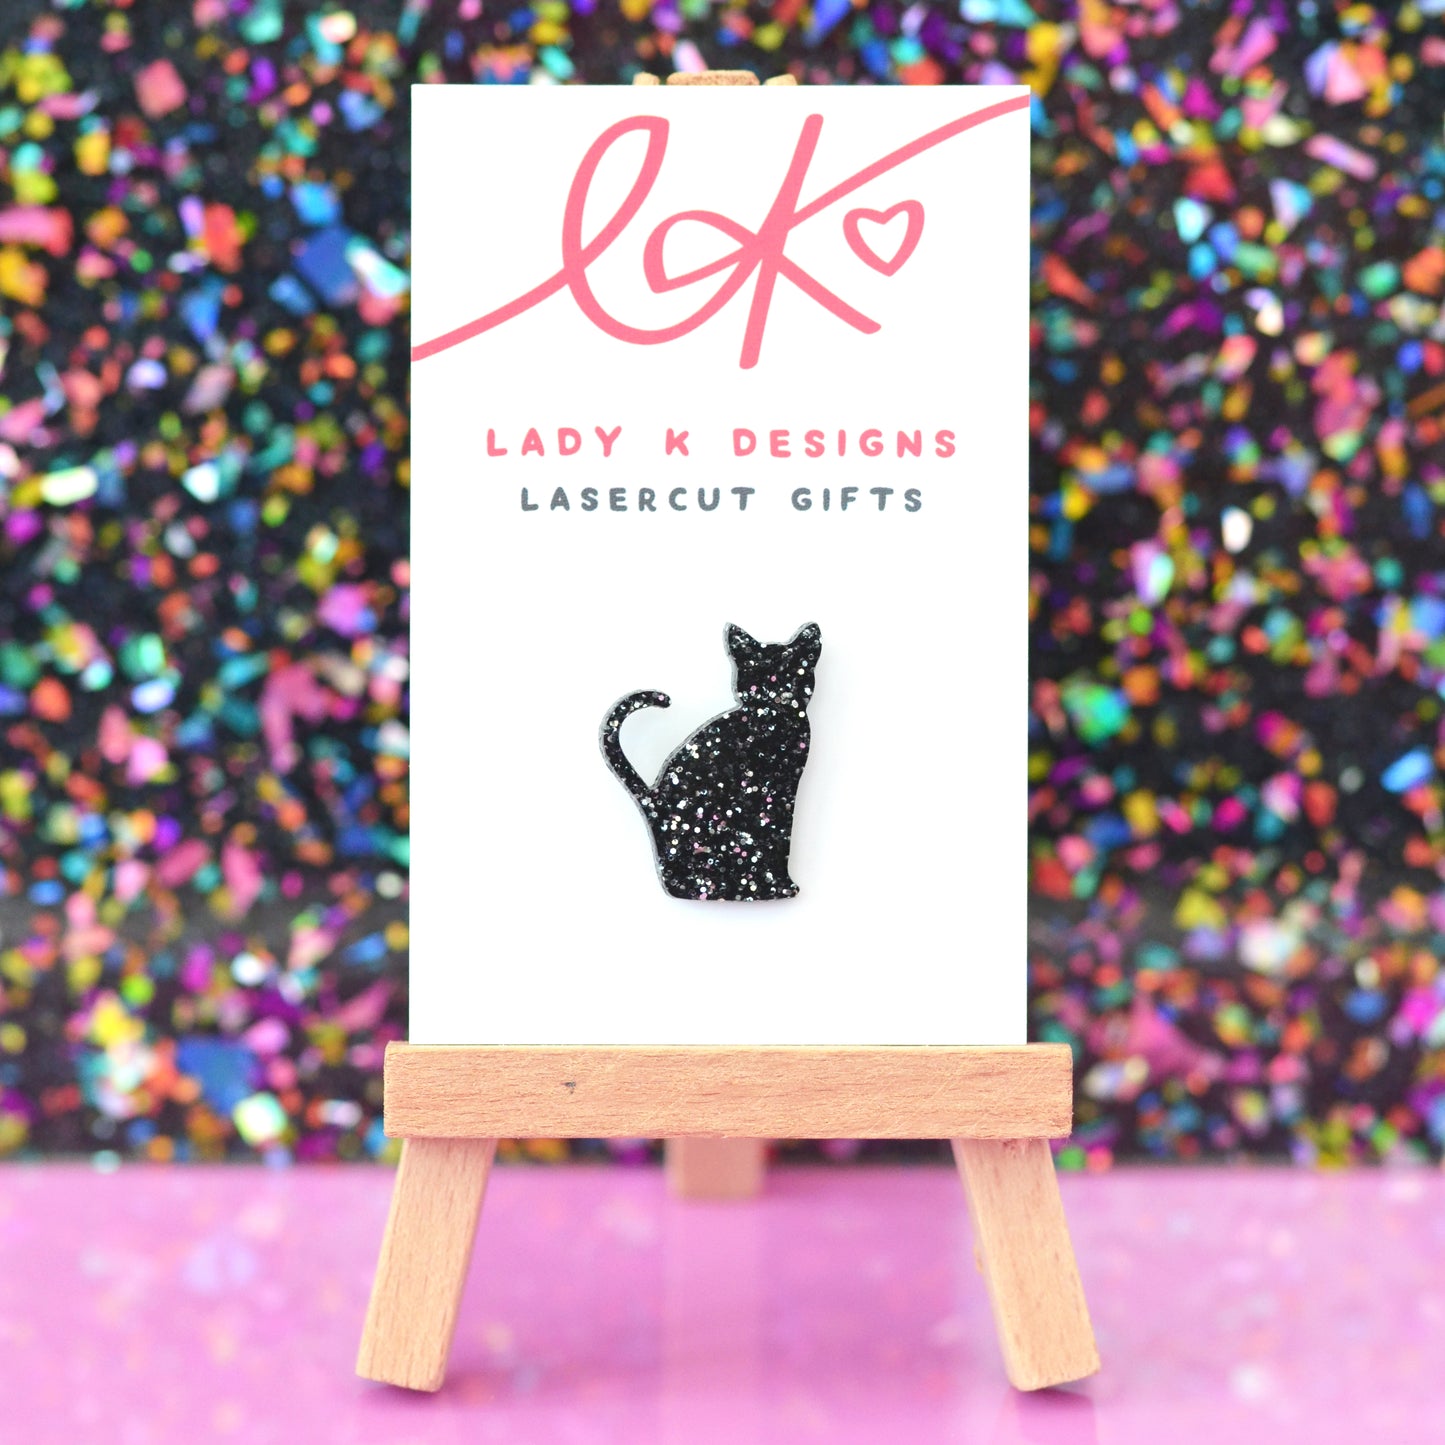 Black Glitter Acrylic Kitty Cat Brooch